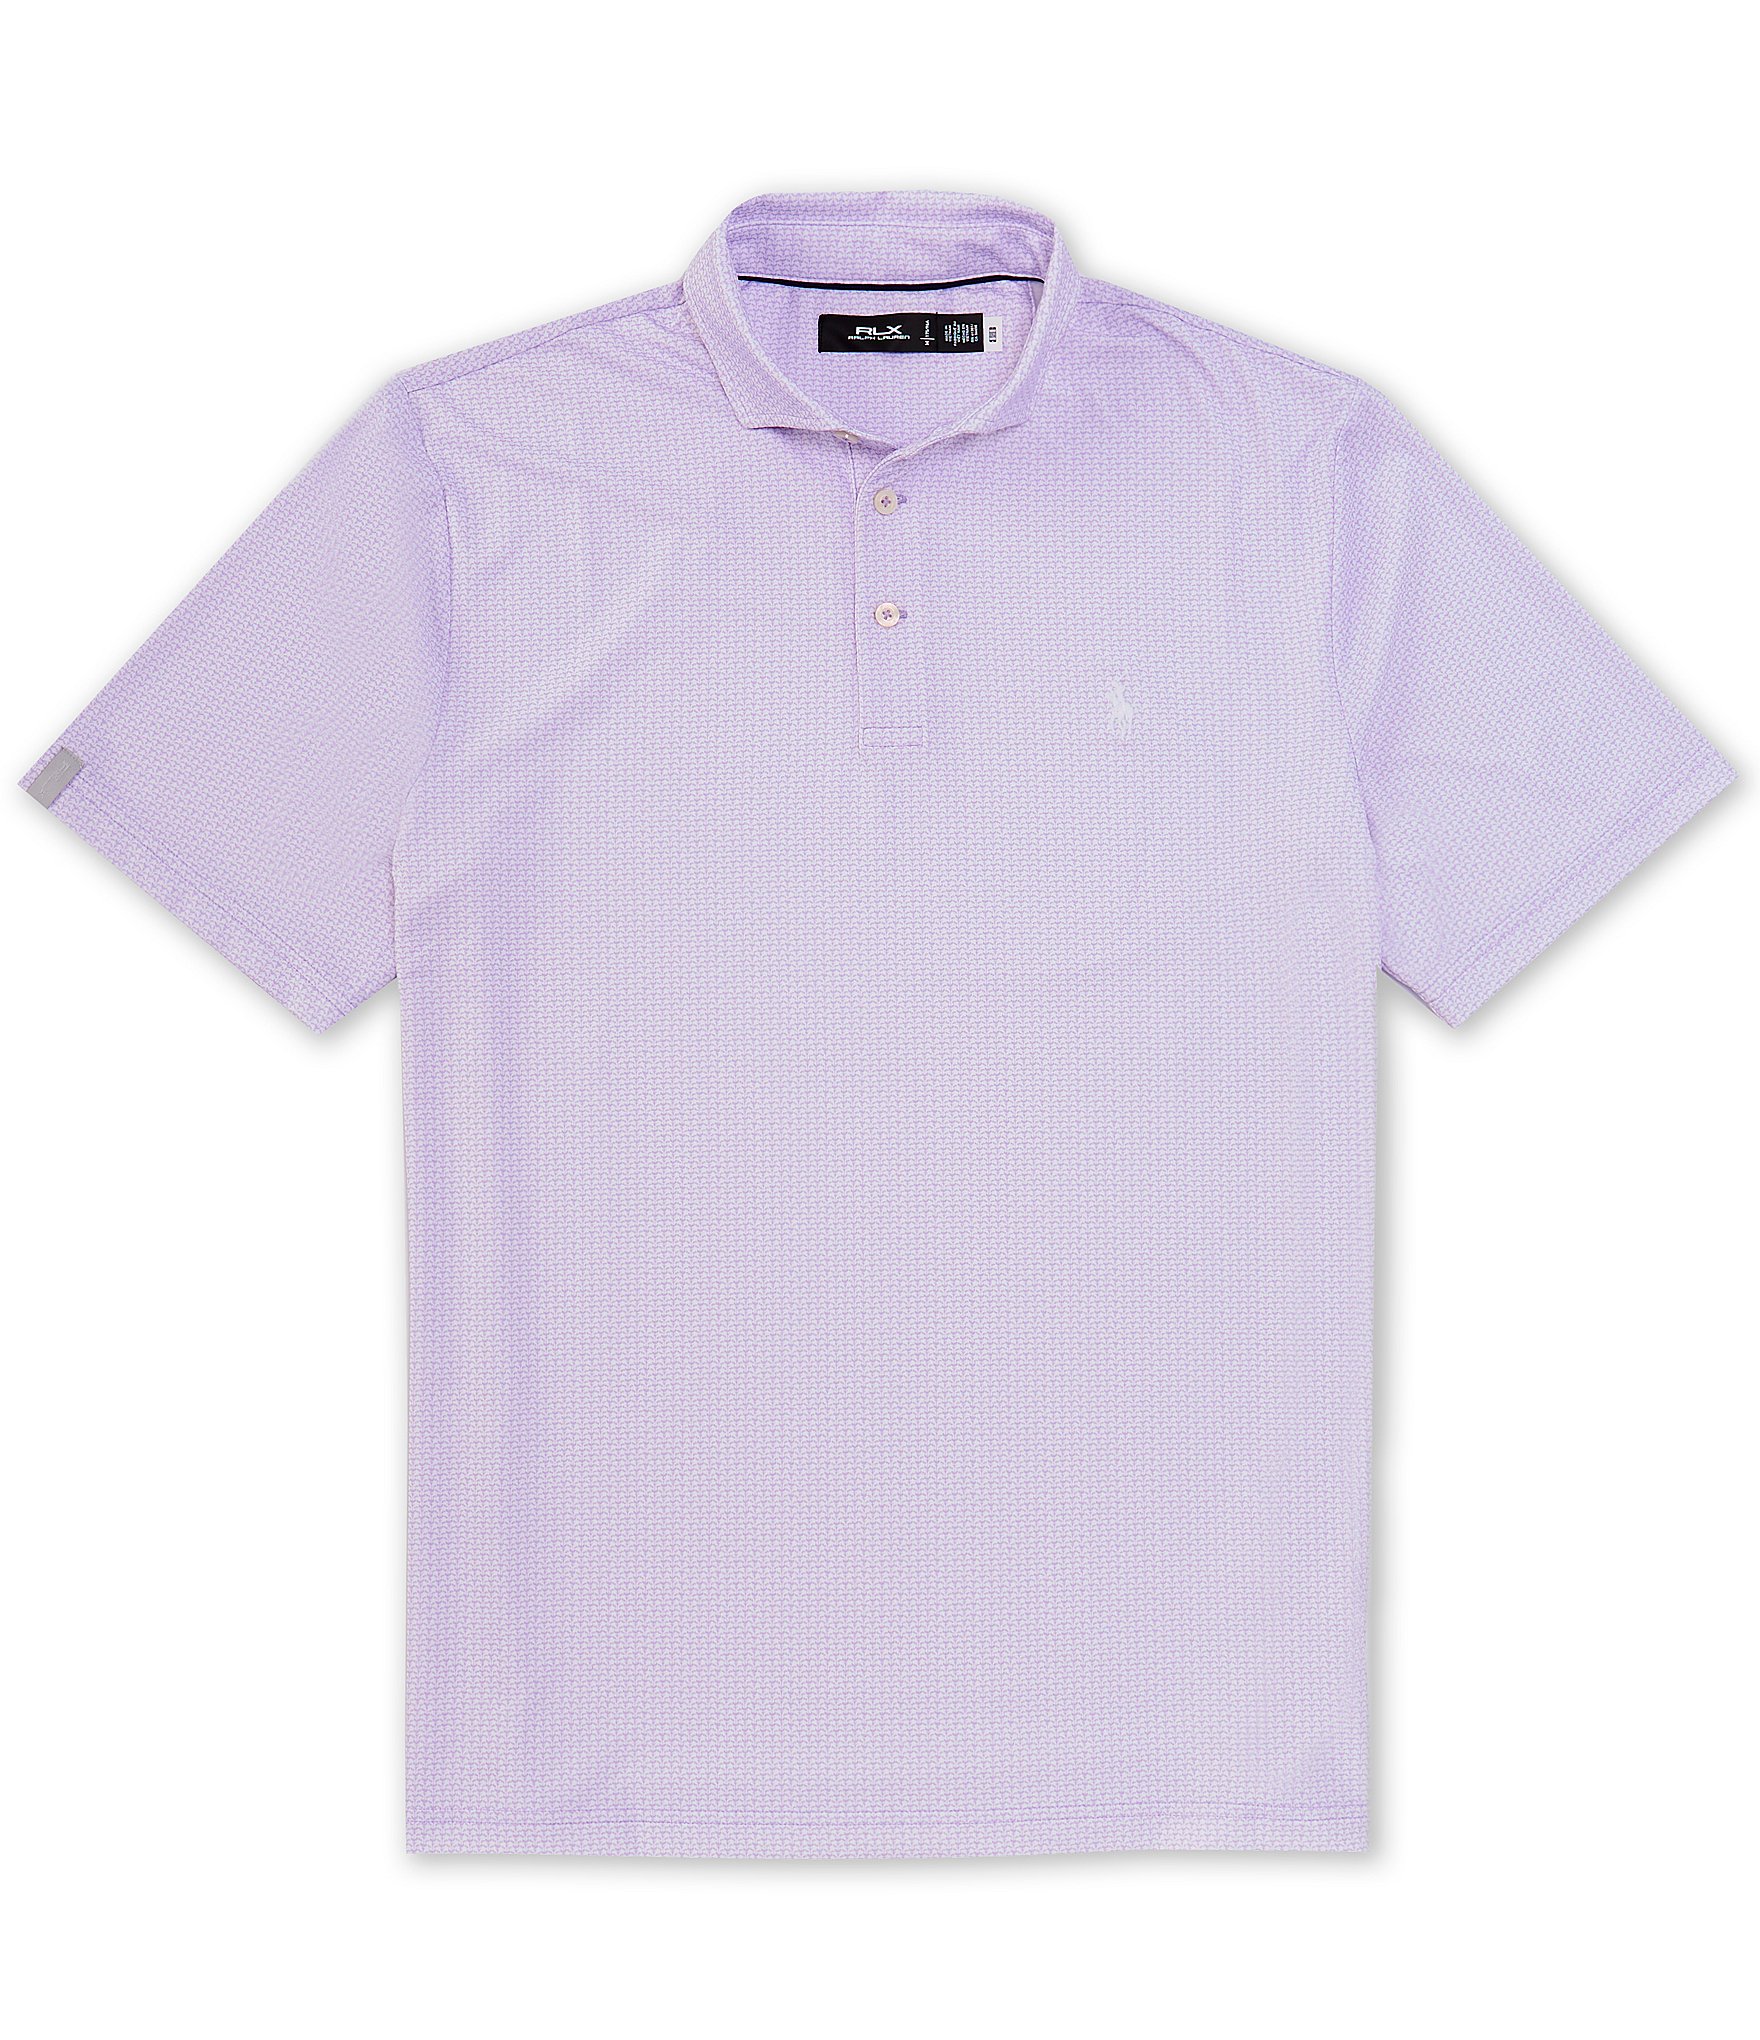 Polo Ralph Lauren RLX Golf Classic Fit Performance Stretch Micro Floral Print Short Sleeve Polo Shirt - L